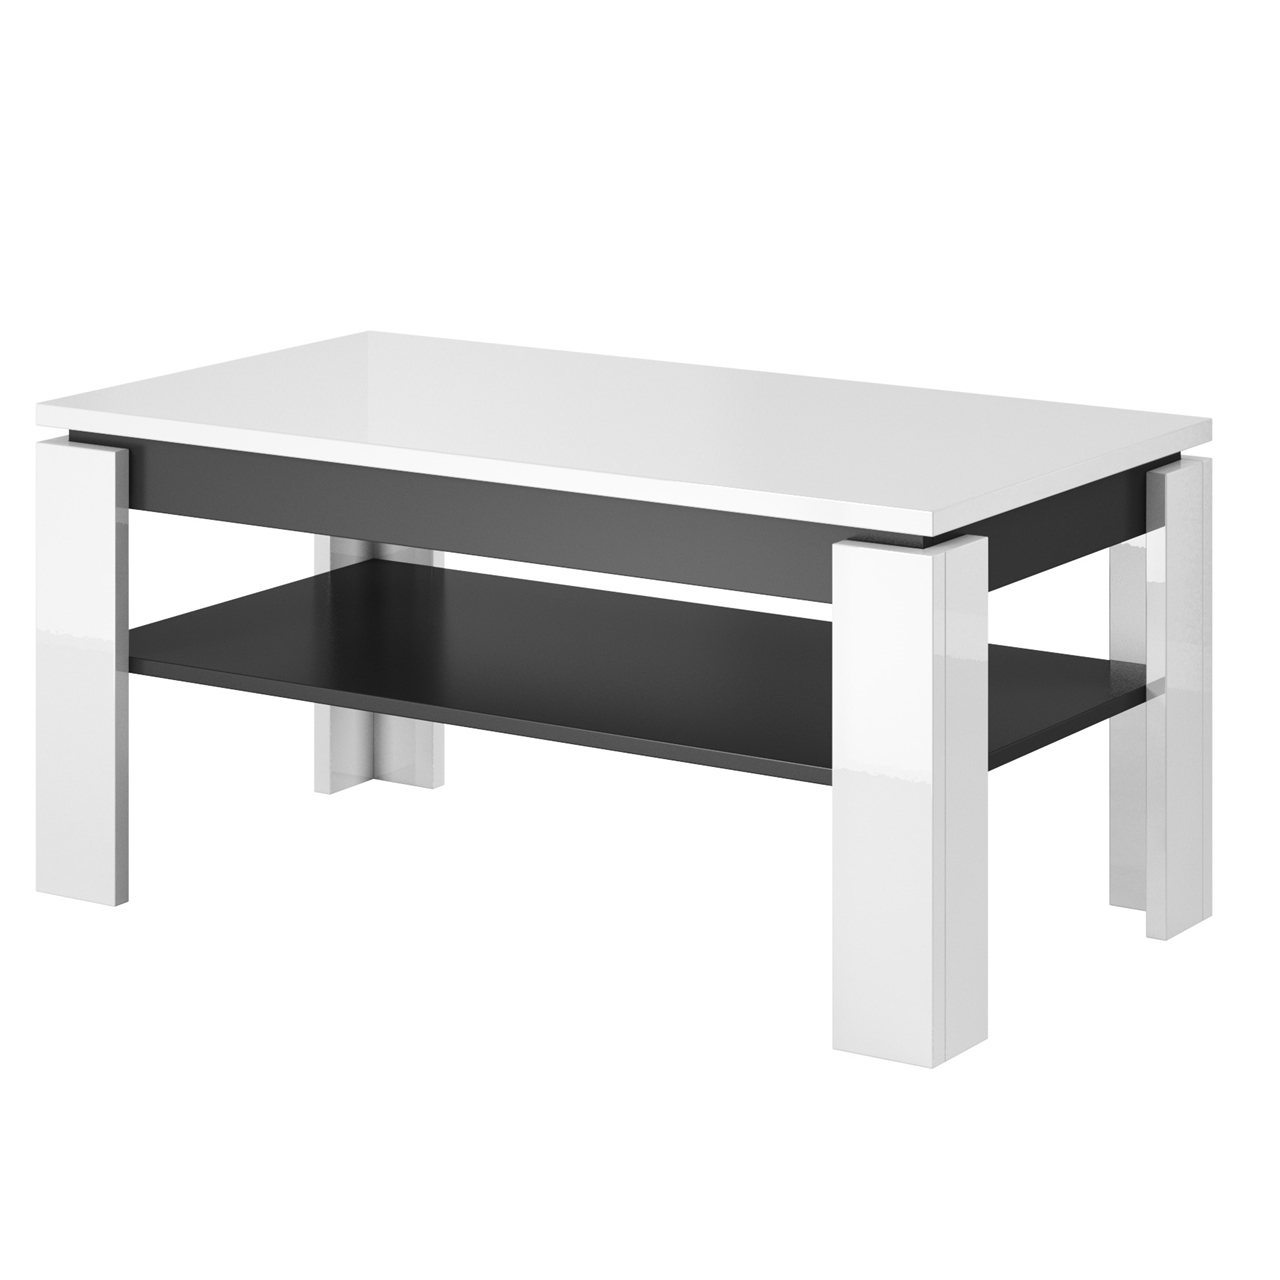 Coffee table TORO white gloss / graphite